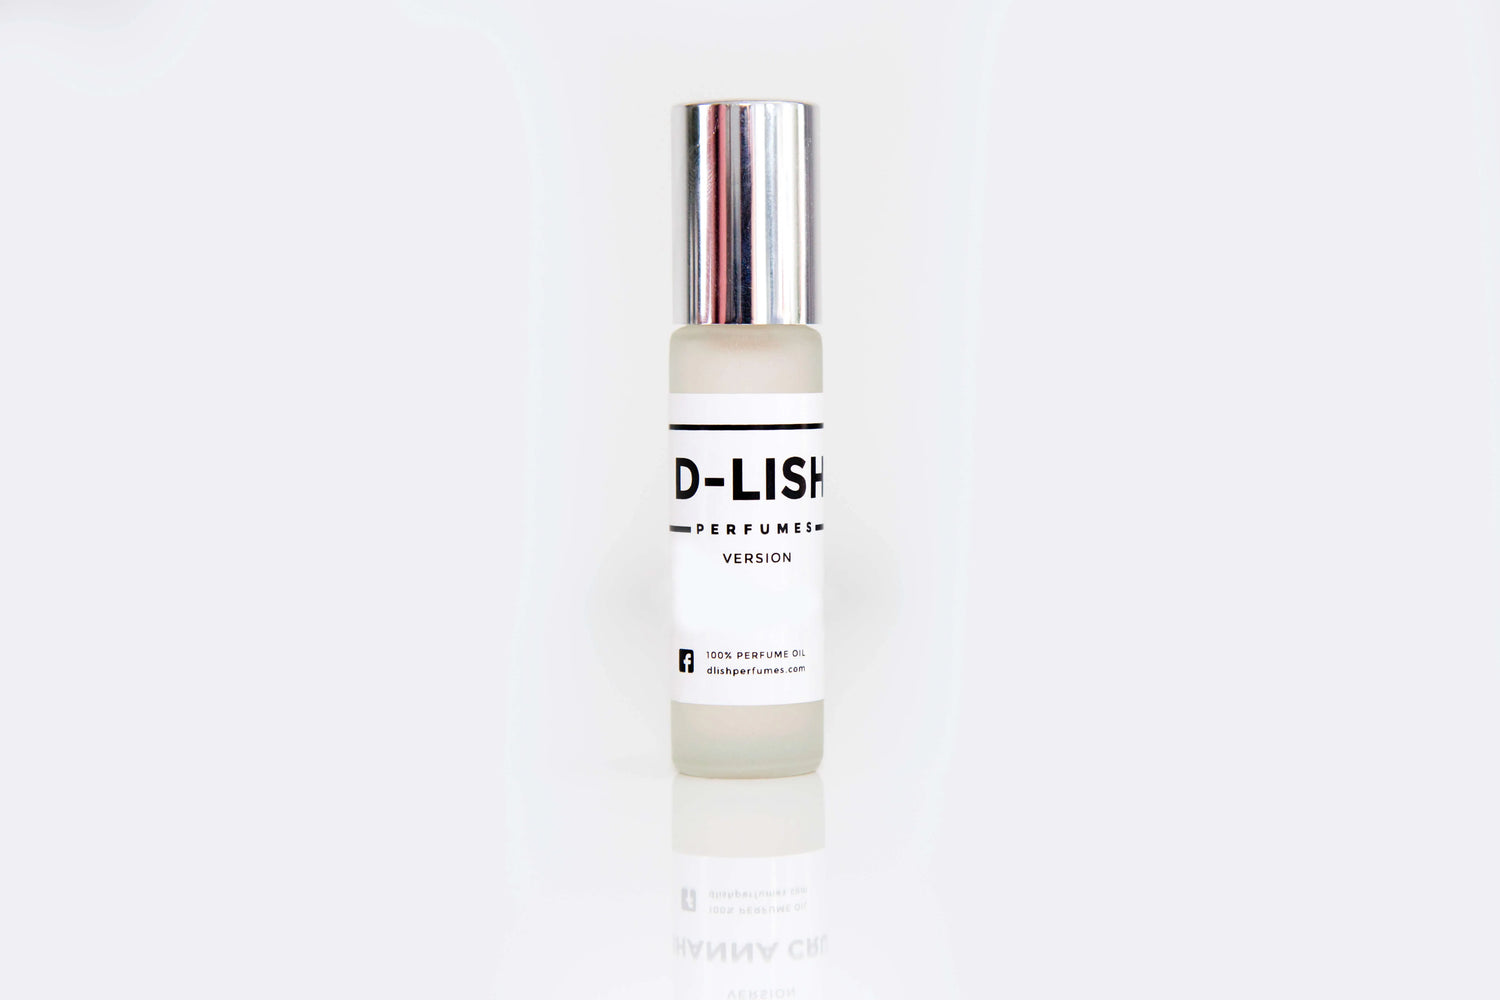 D-Lish Version of Lancome Perfumes